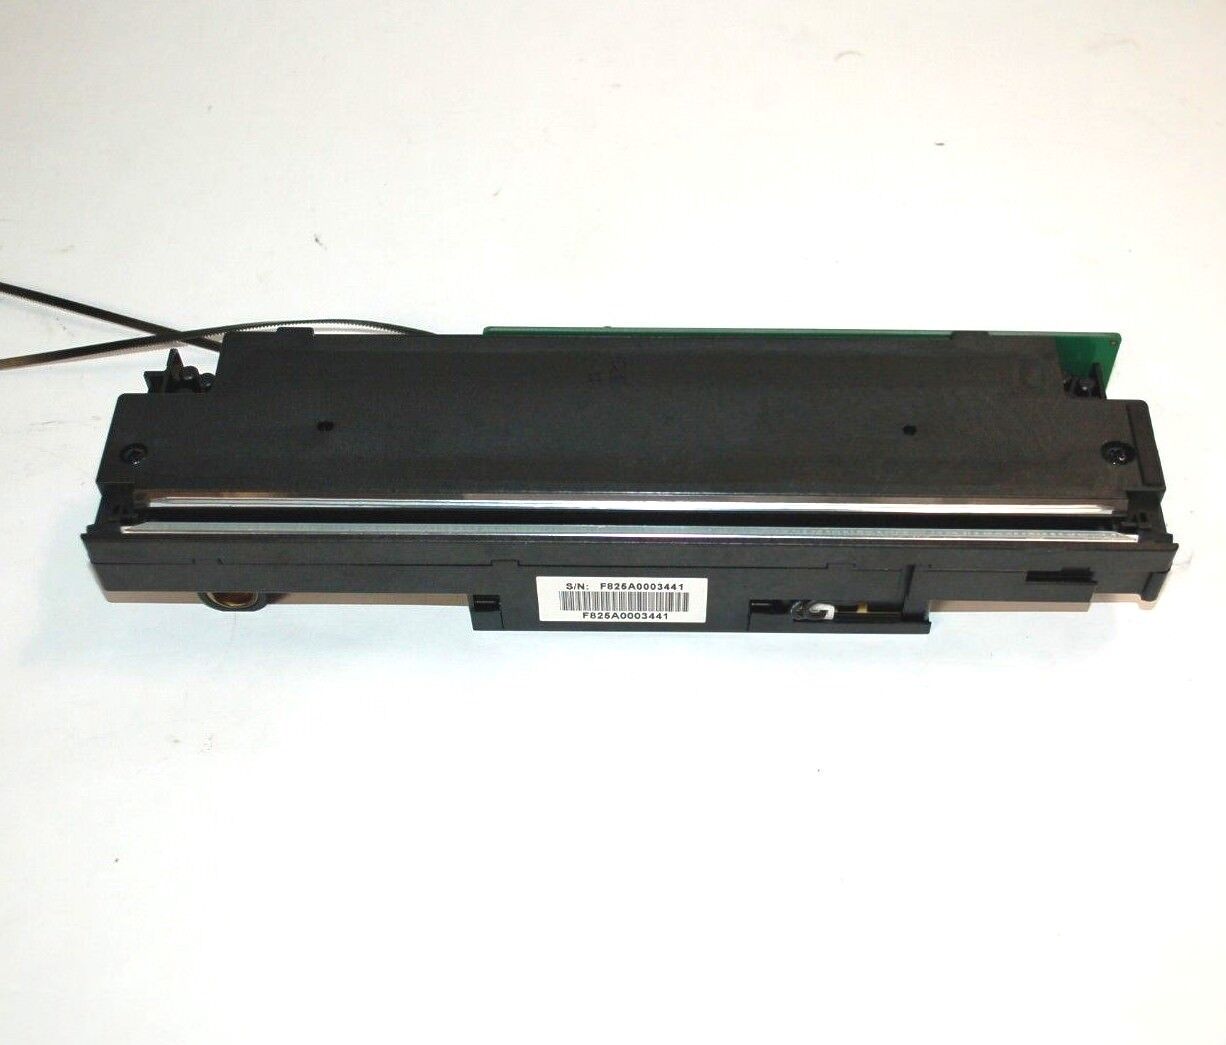 DELL 2135CN Printer Scanner Lamp Unit